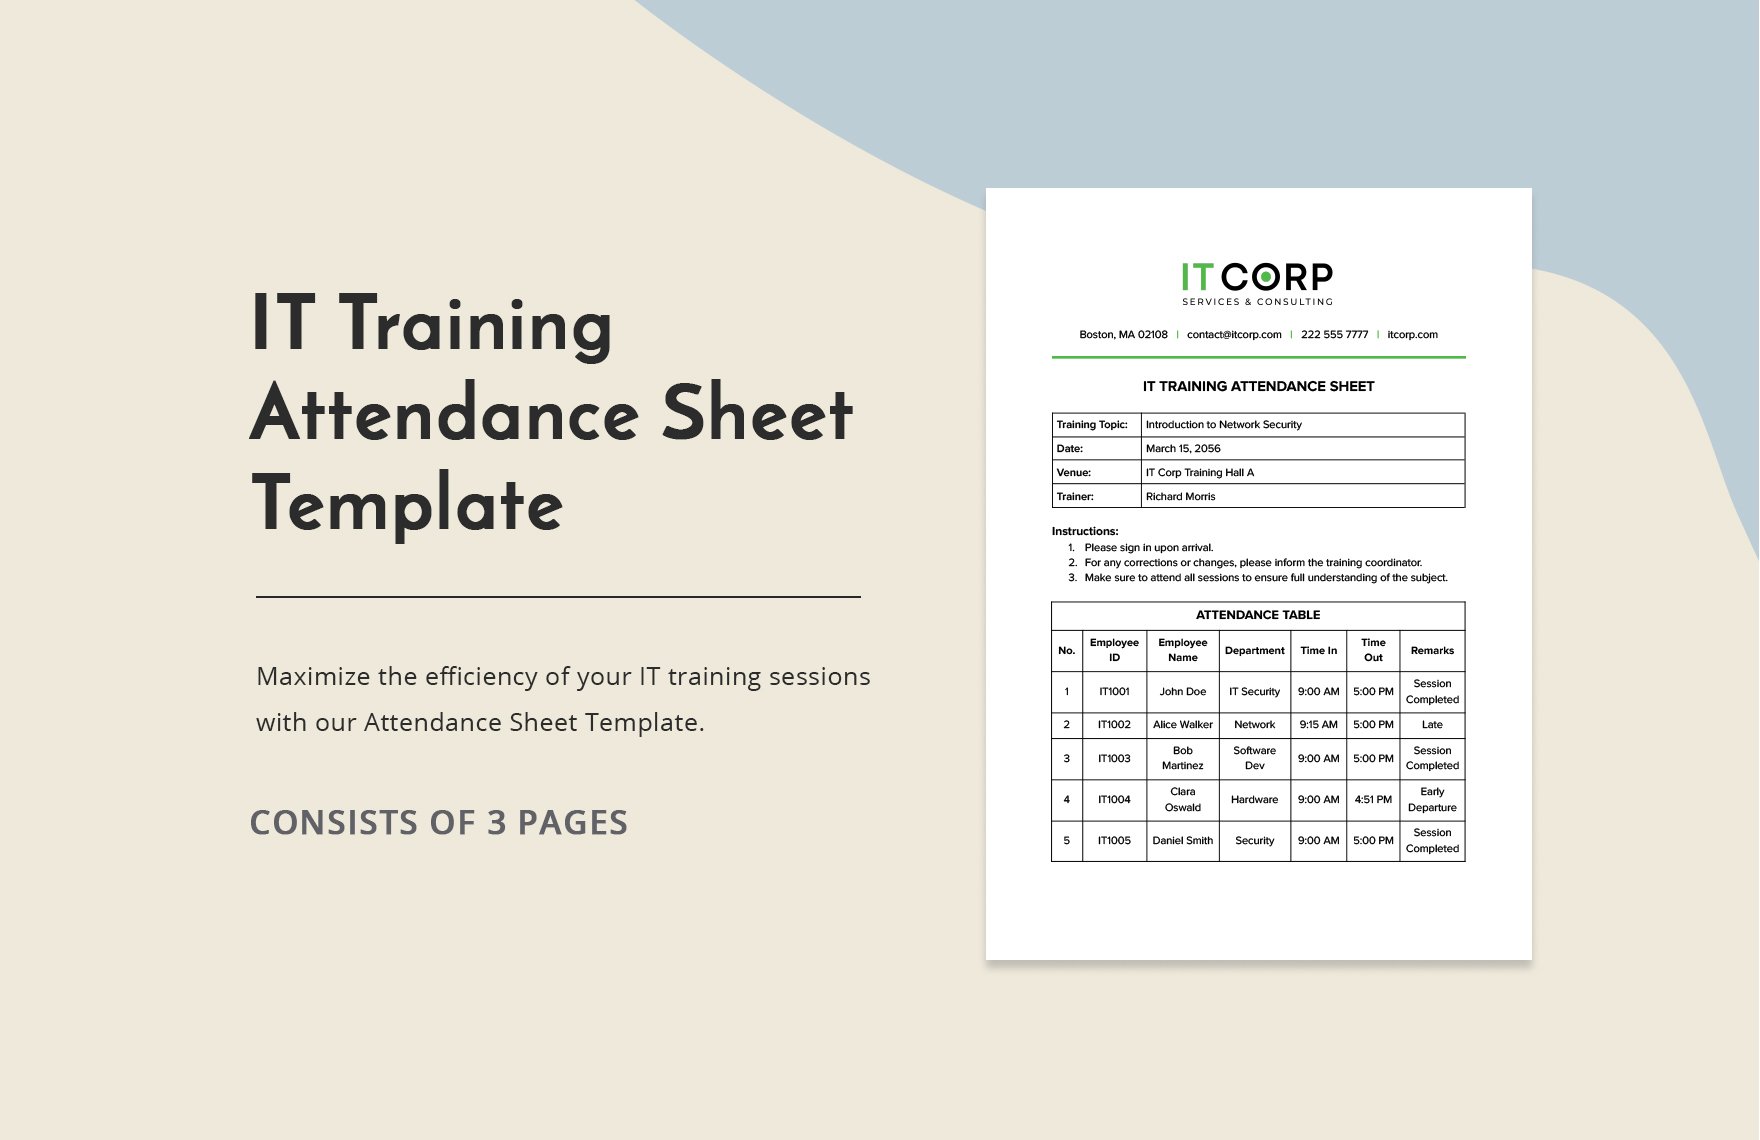 IT Training Attendance Sheet Template in Word, Google Docs, PDF